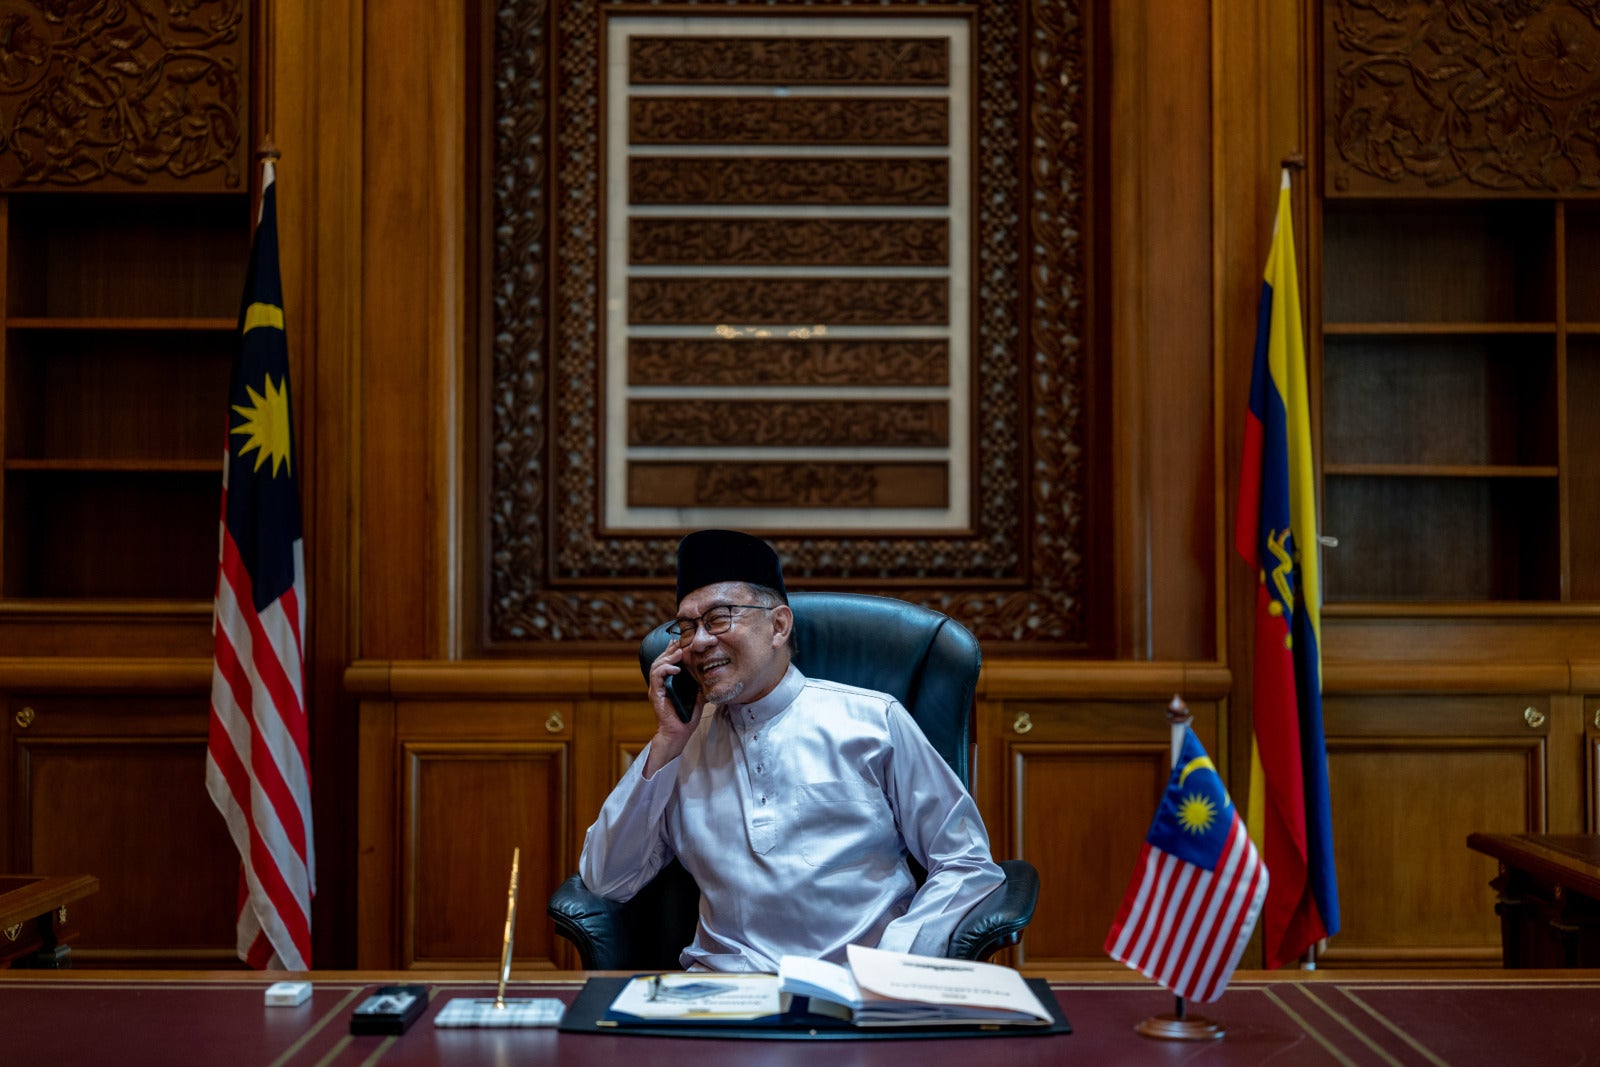 Anwar Ibrahim in office on phone